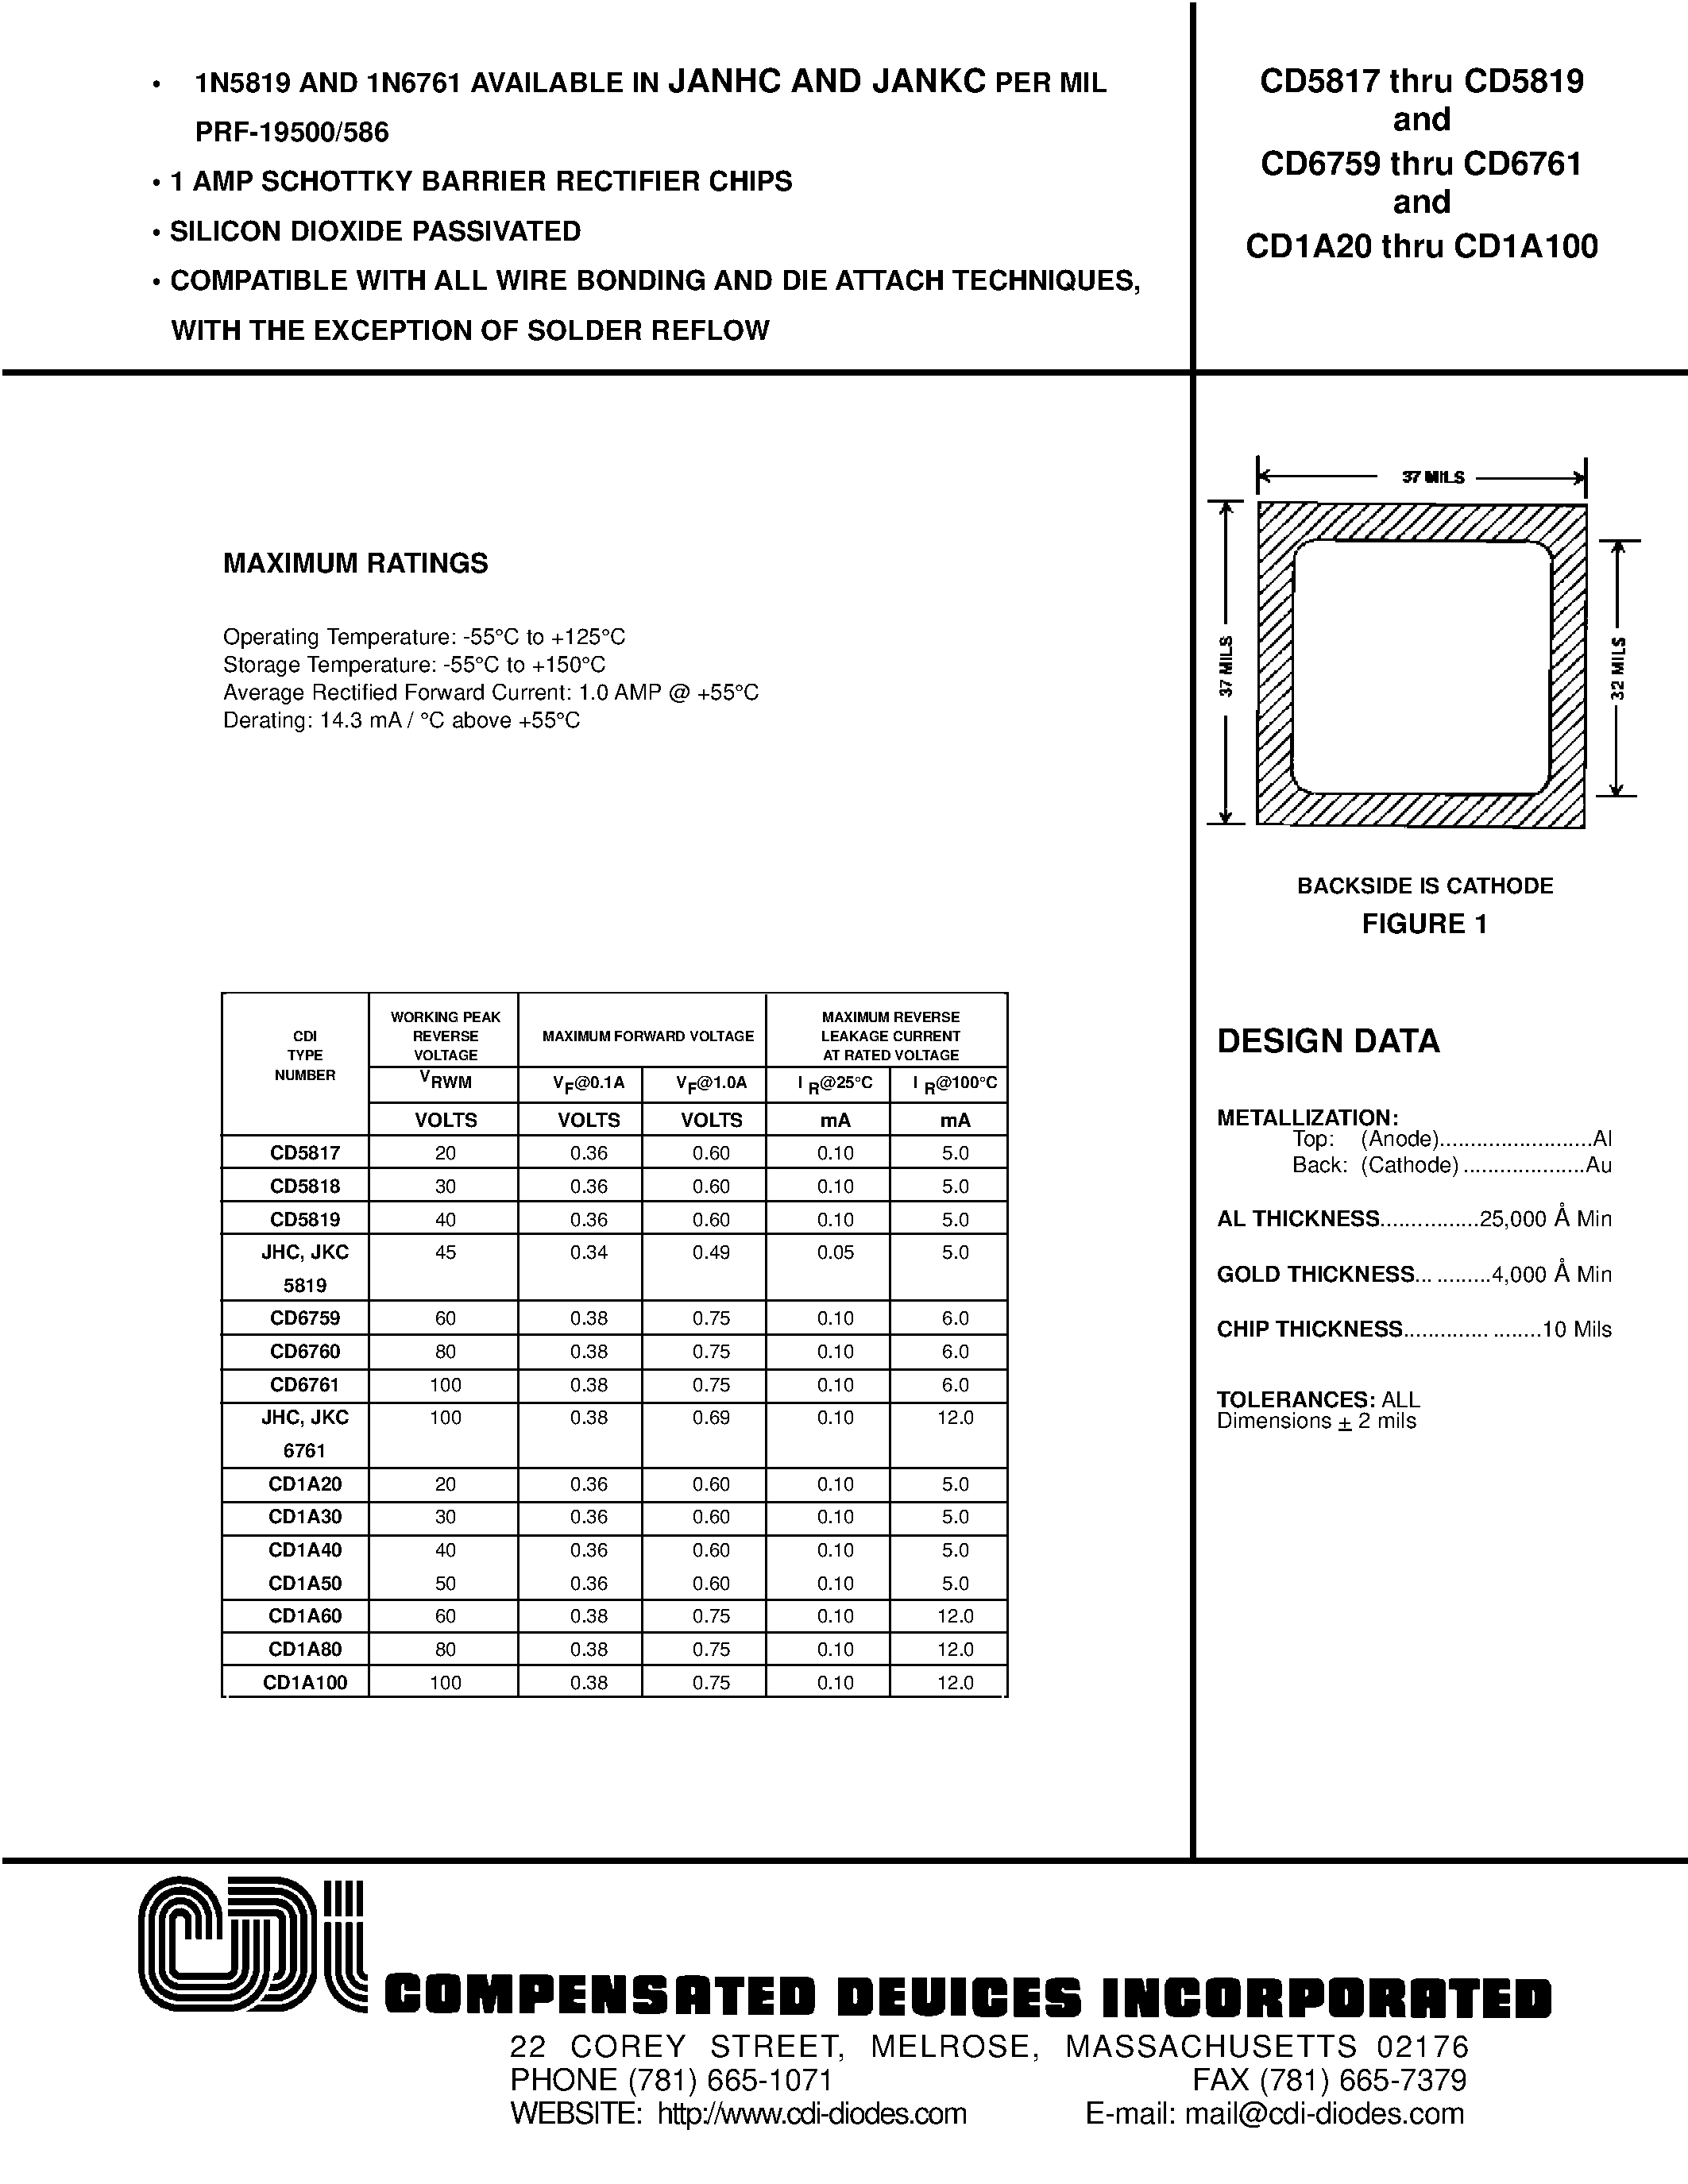 Datasheet CD5817 - 1 AMP SCHOTTKY BARRIER RECTIFIER CHIPS page 1